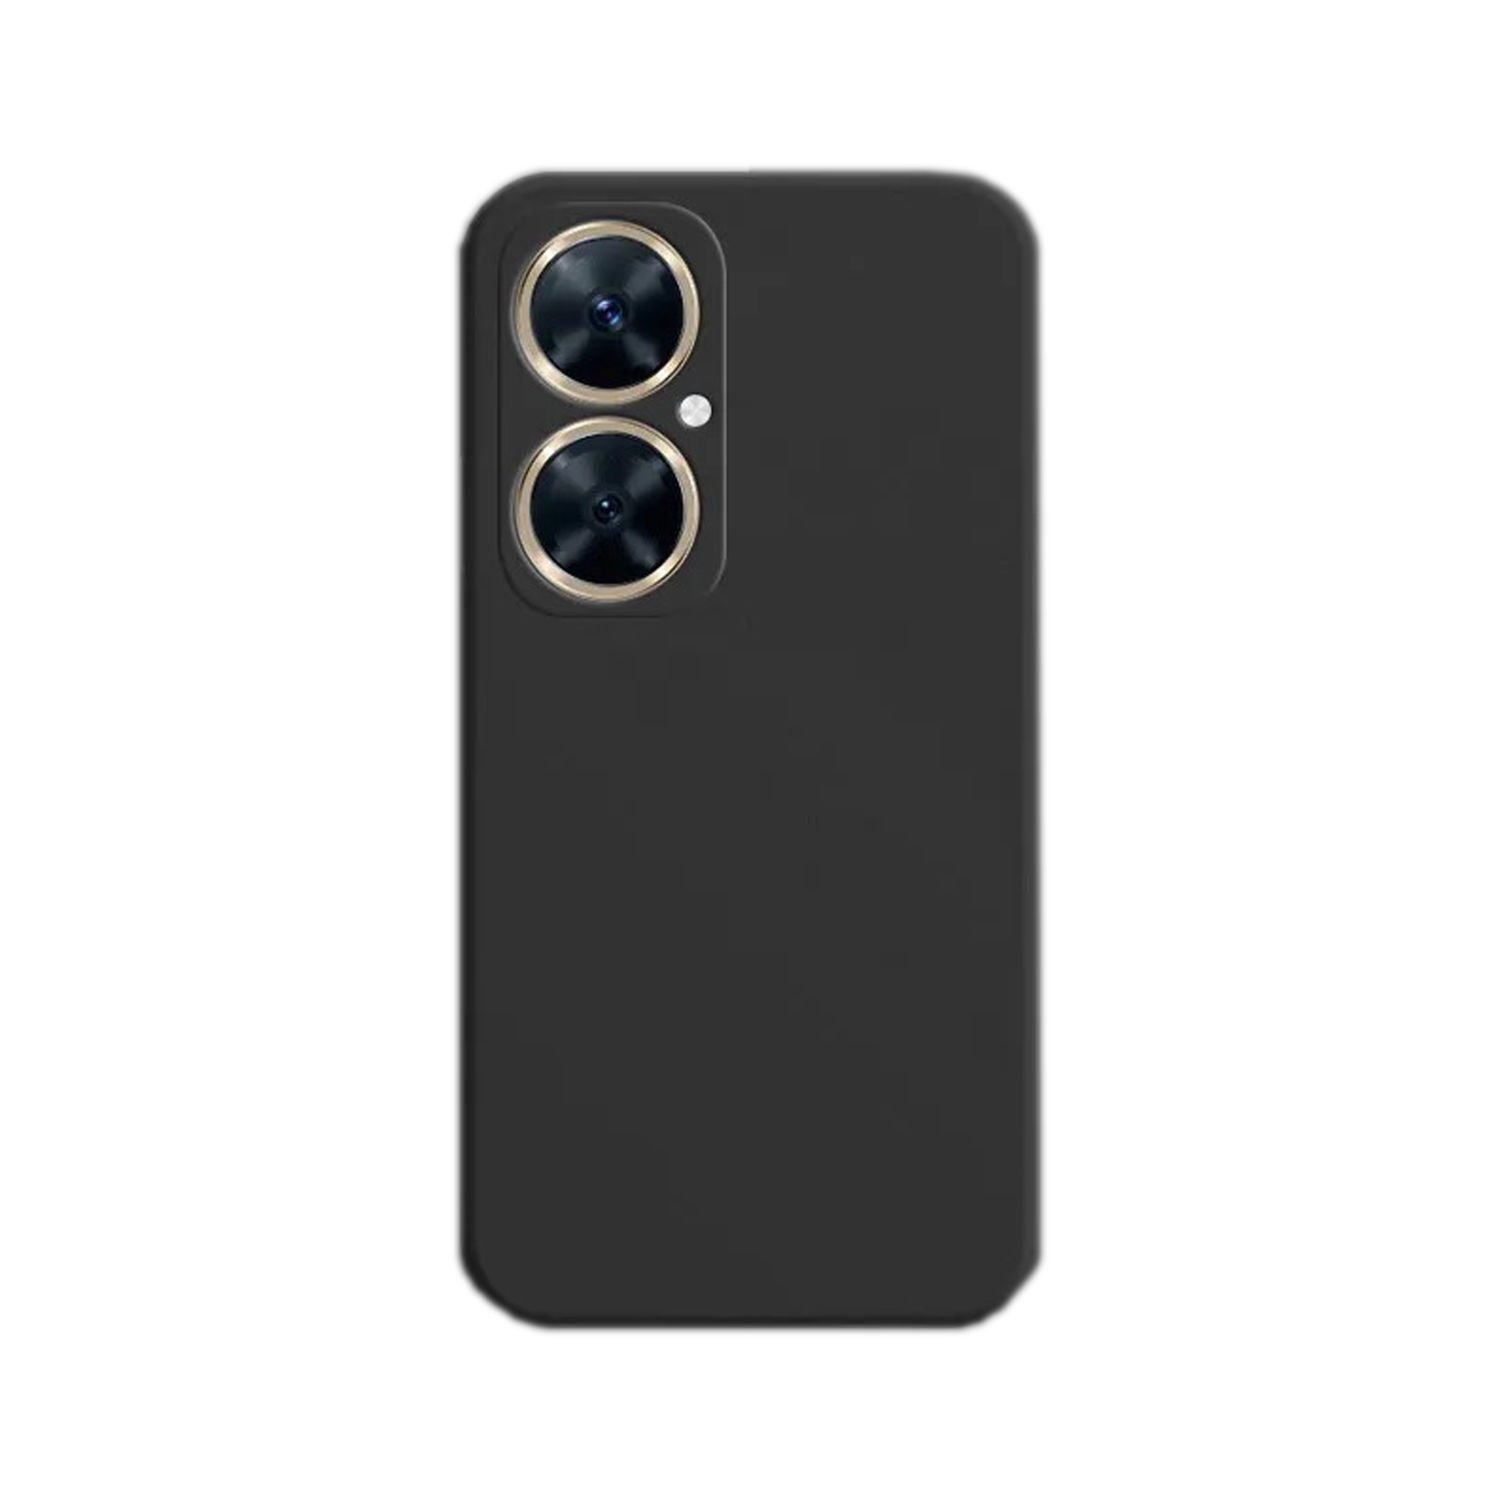 Microcase Huawei Nova 11i Elektrocase Serisi Silikon Kılıf - Siyah AL3340